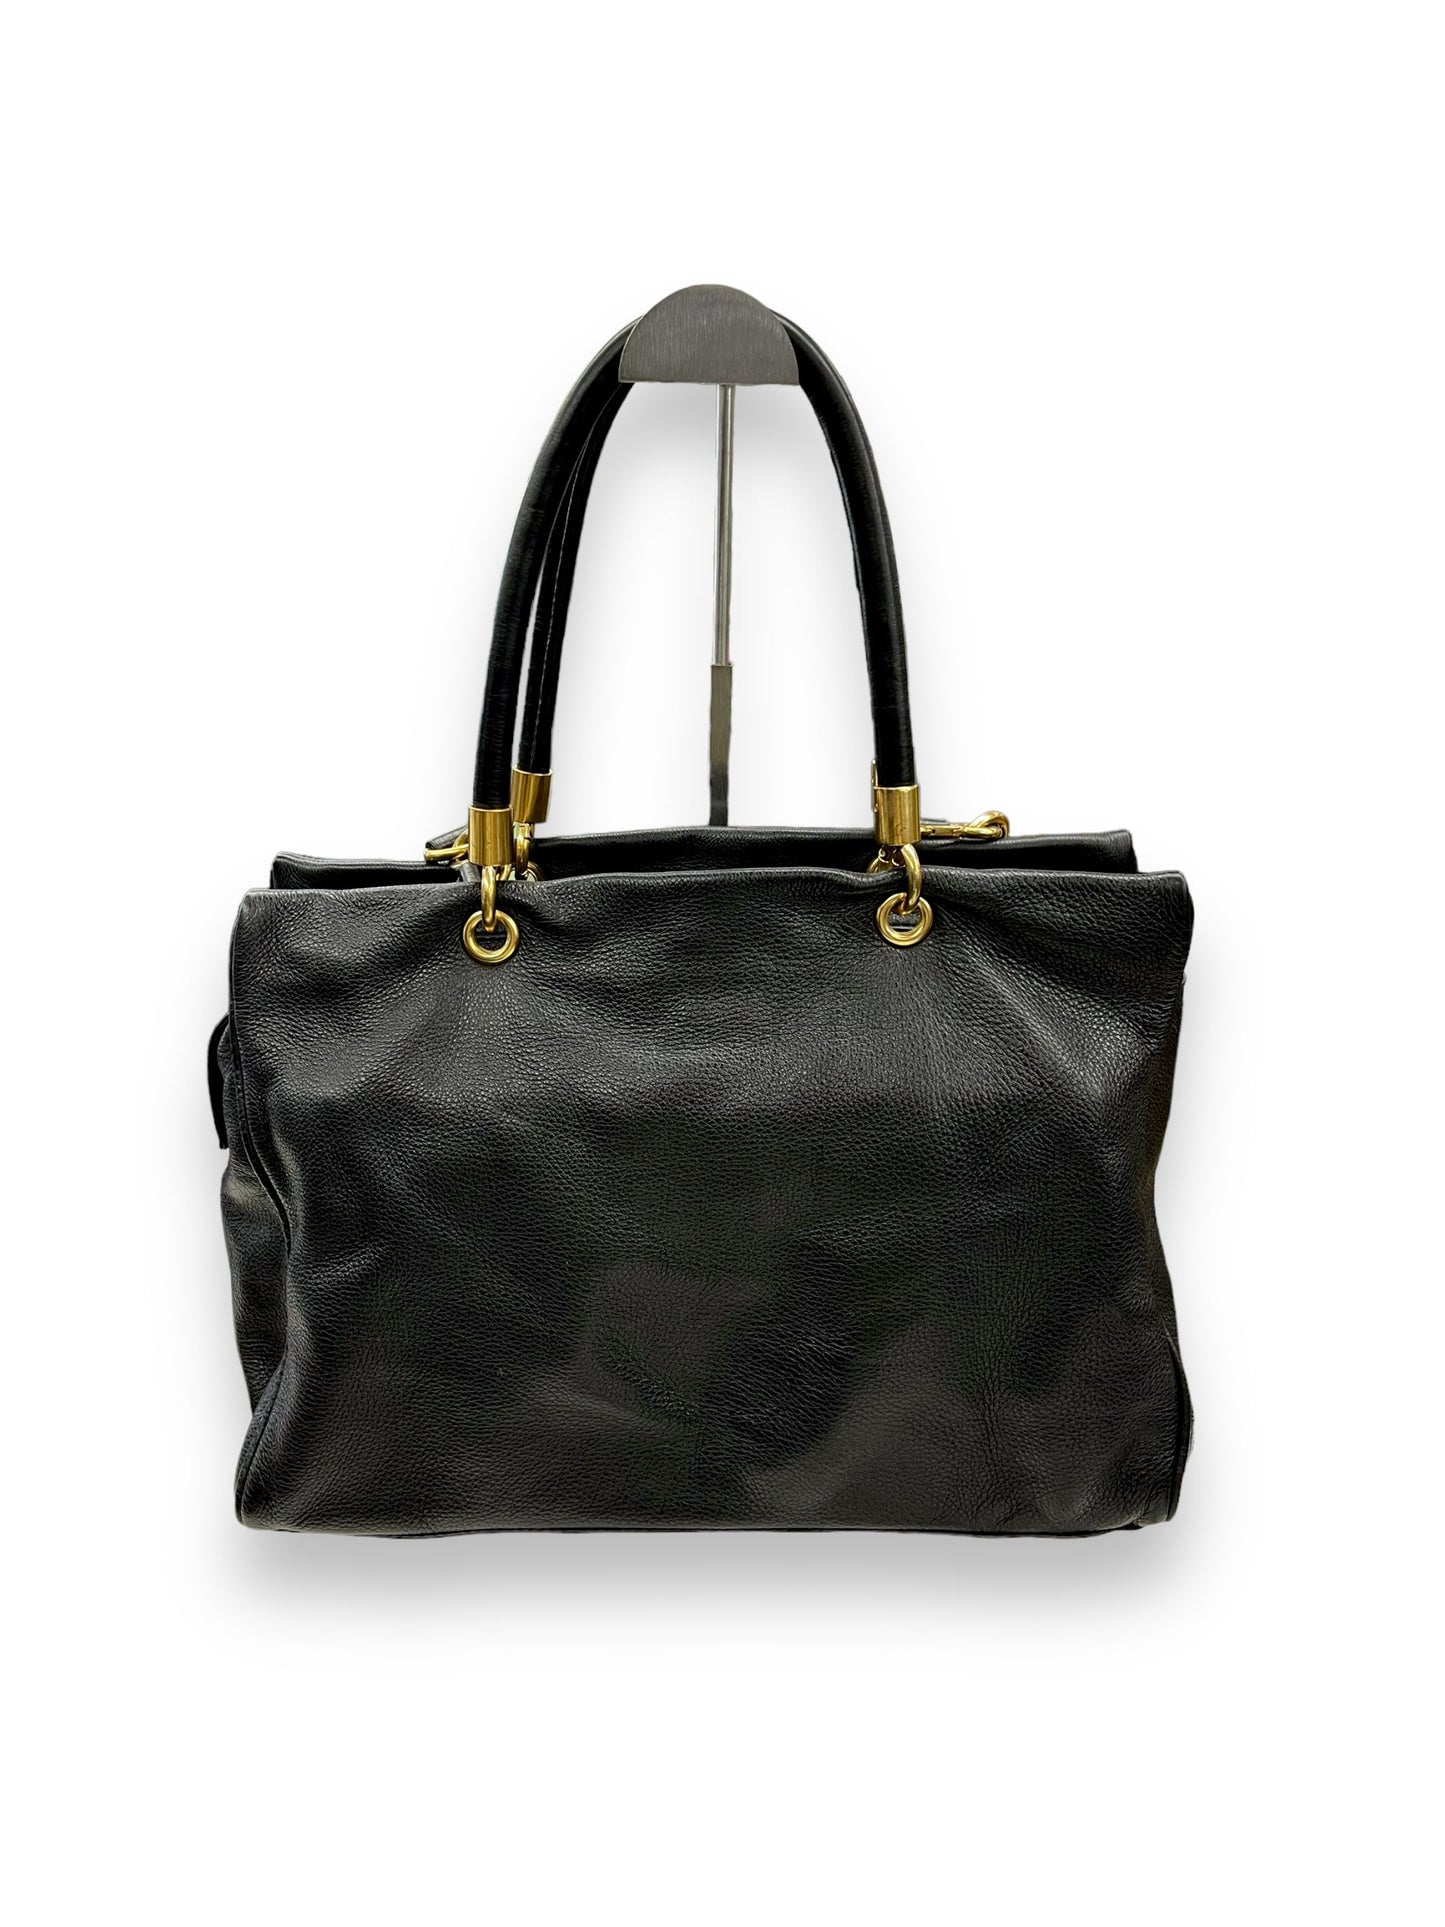 Handbag Designer By Marc By Marc Jacobs  Size: Large